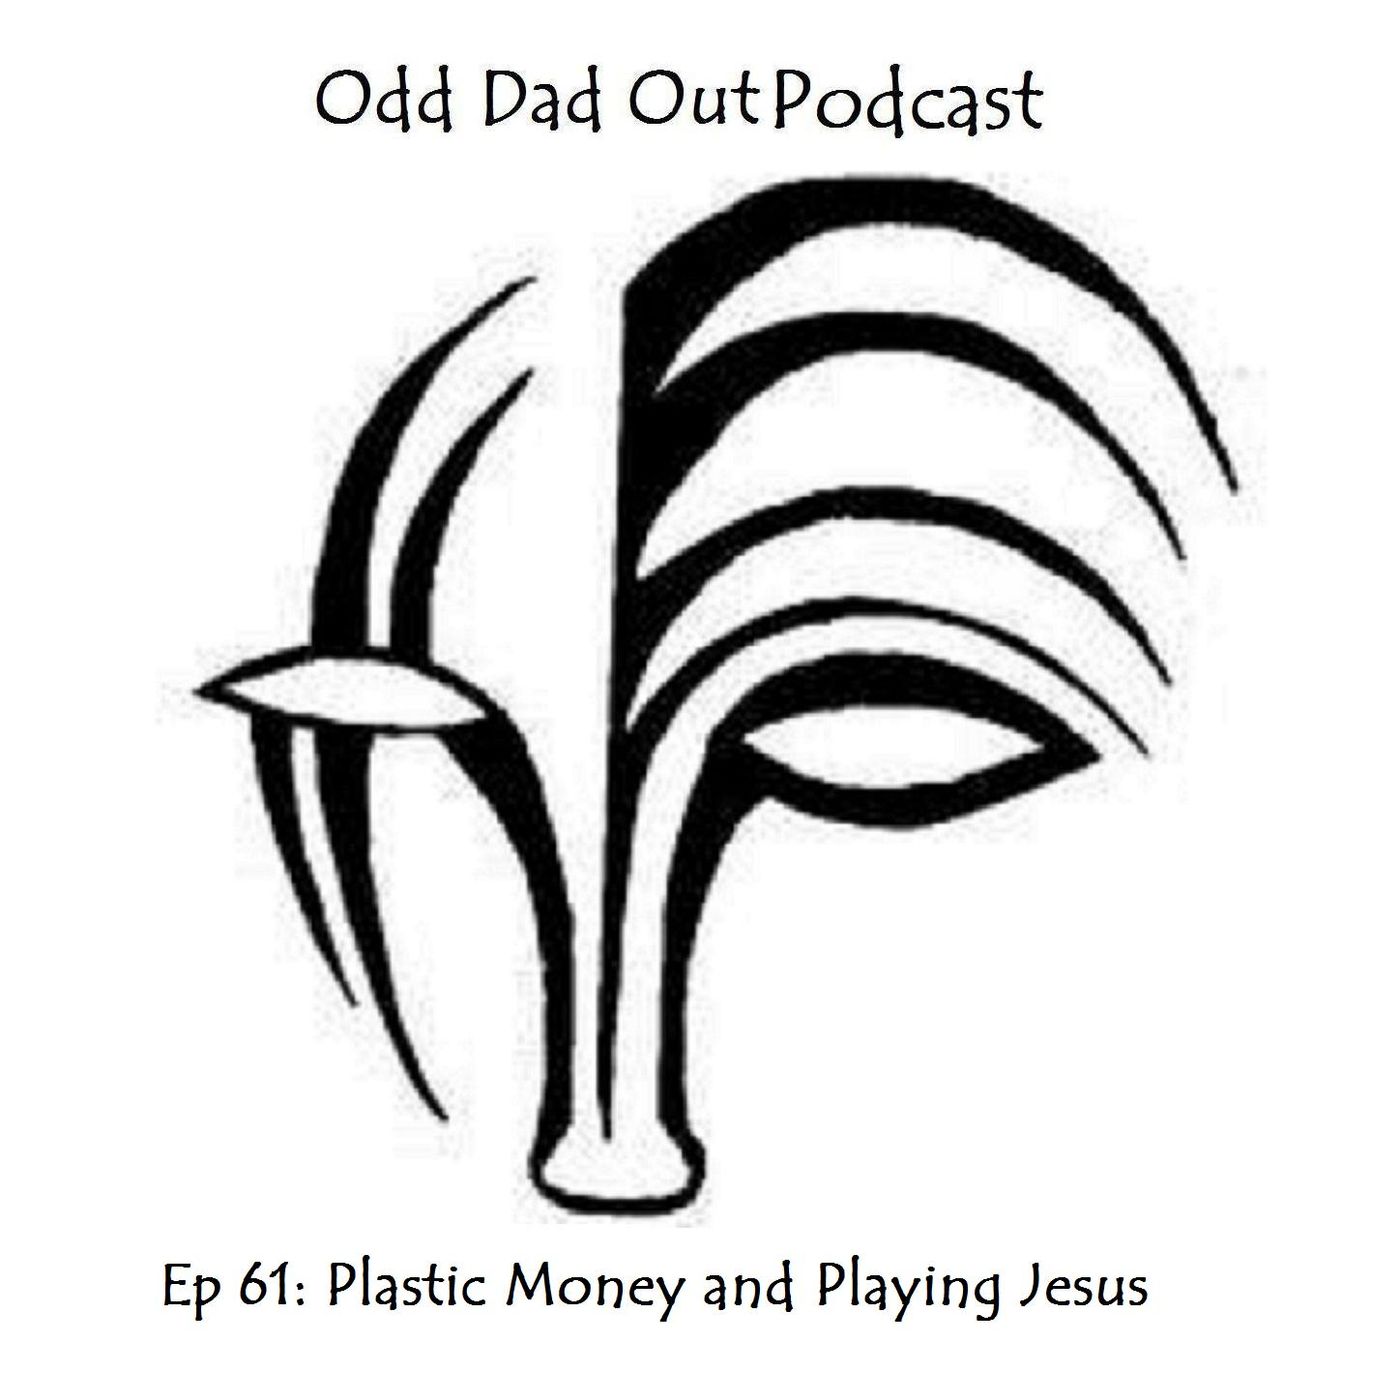 ODO 61: Plastic Money and Playing Jesus